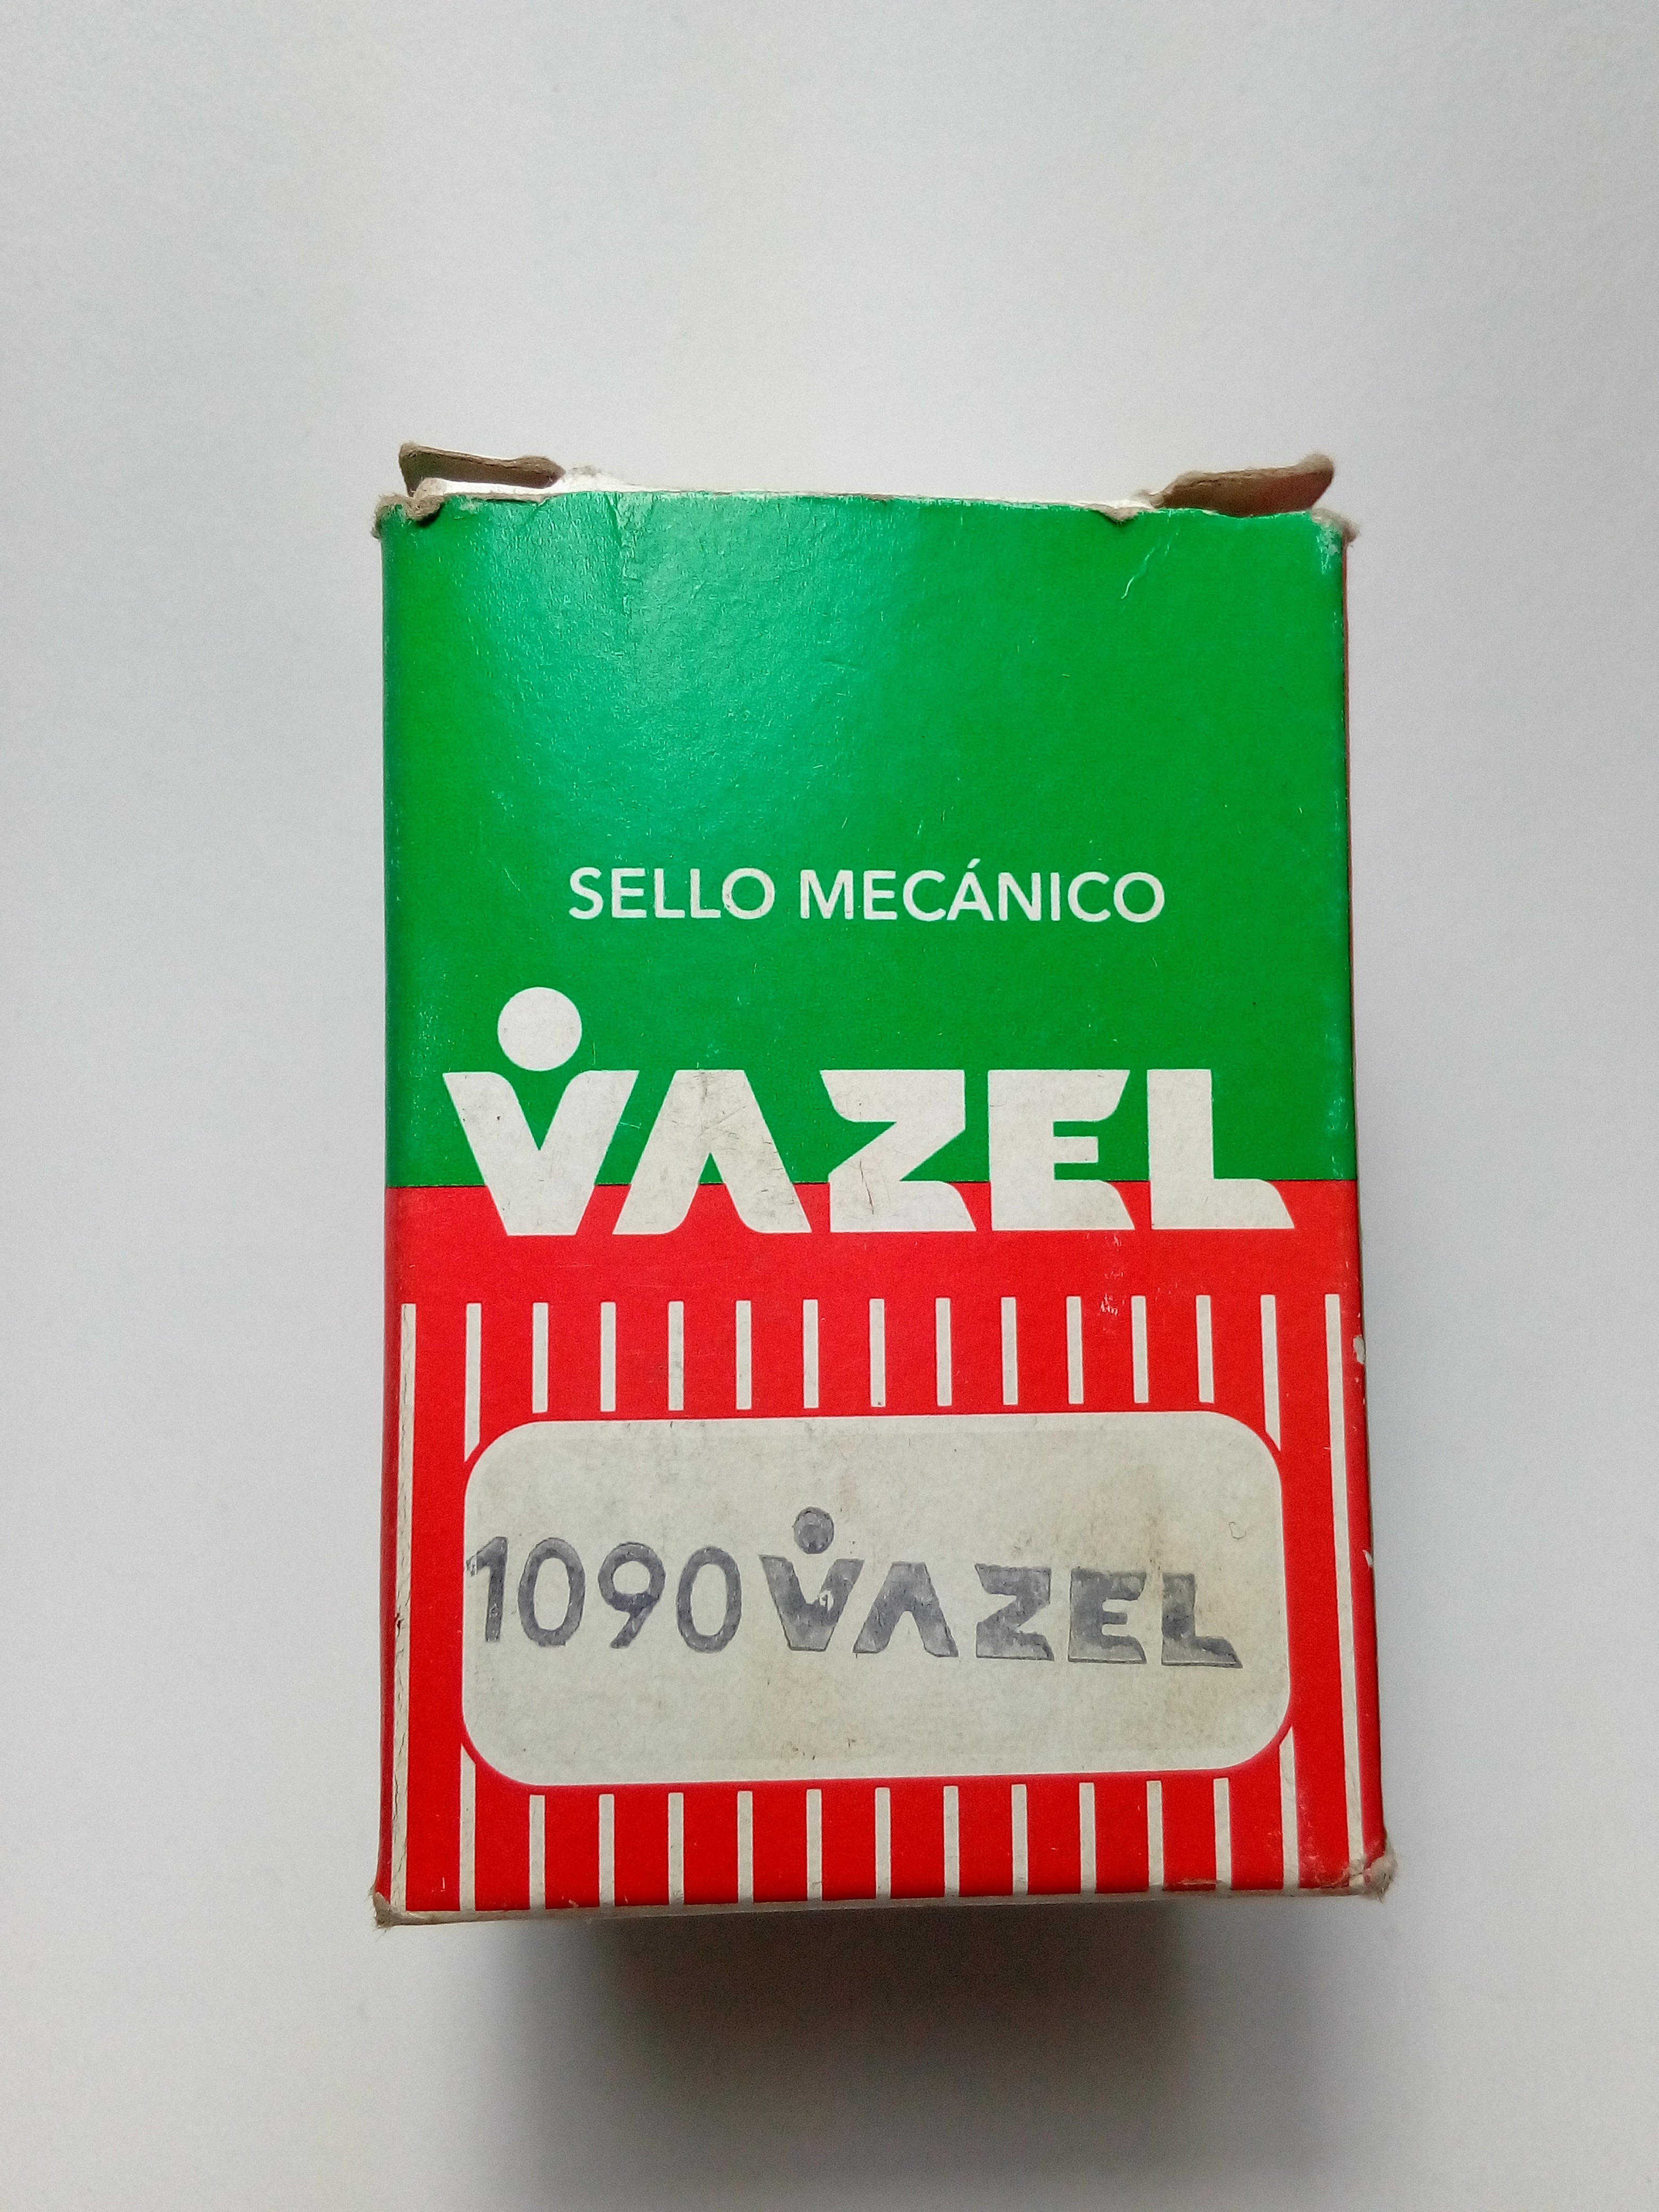 Sello Mecánico Vazel 1090